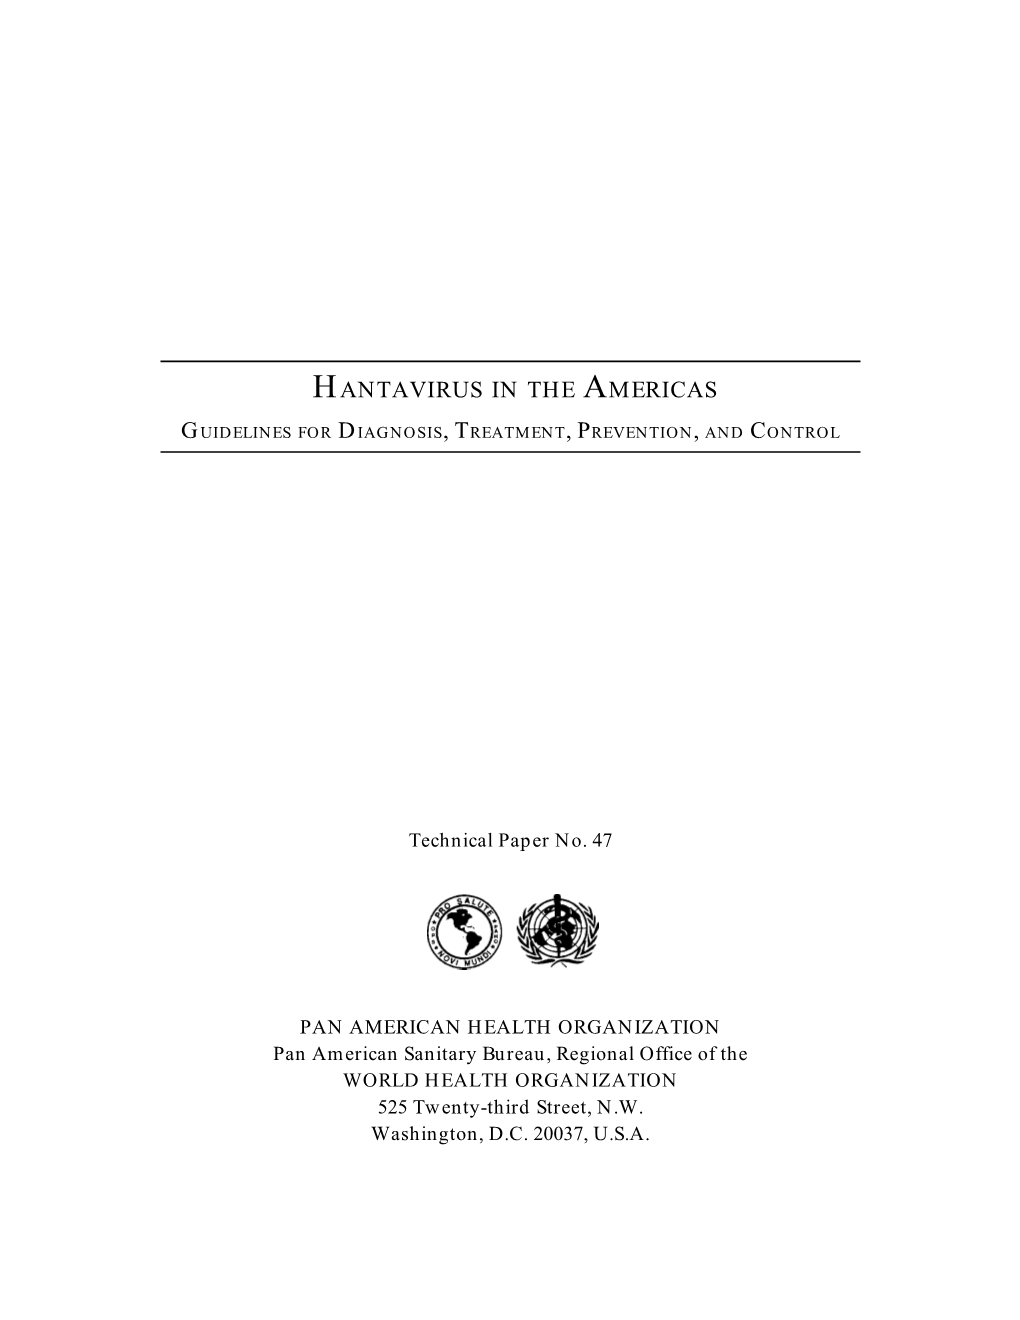 Hantavirus in the Americas